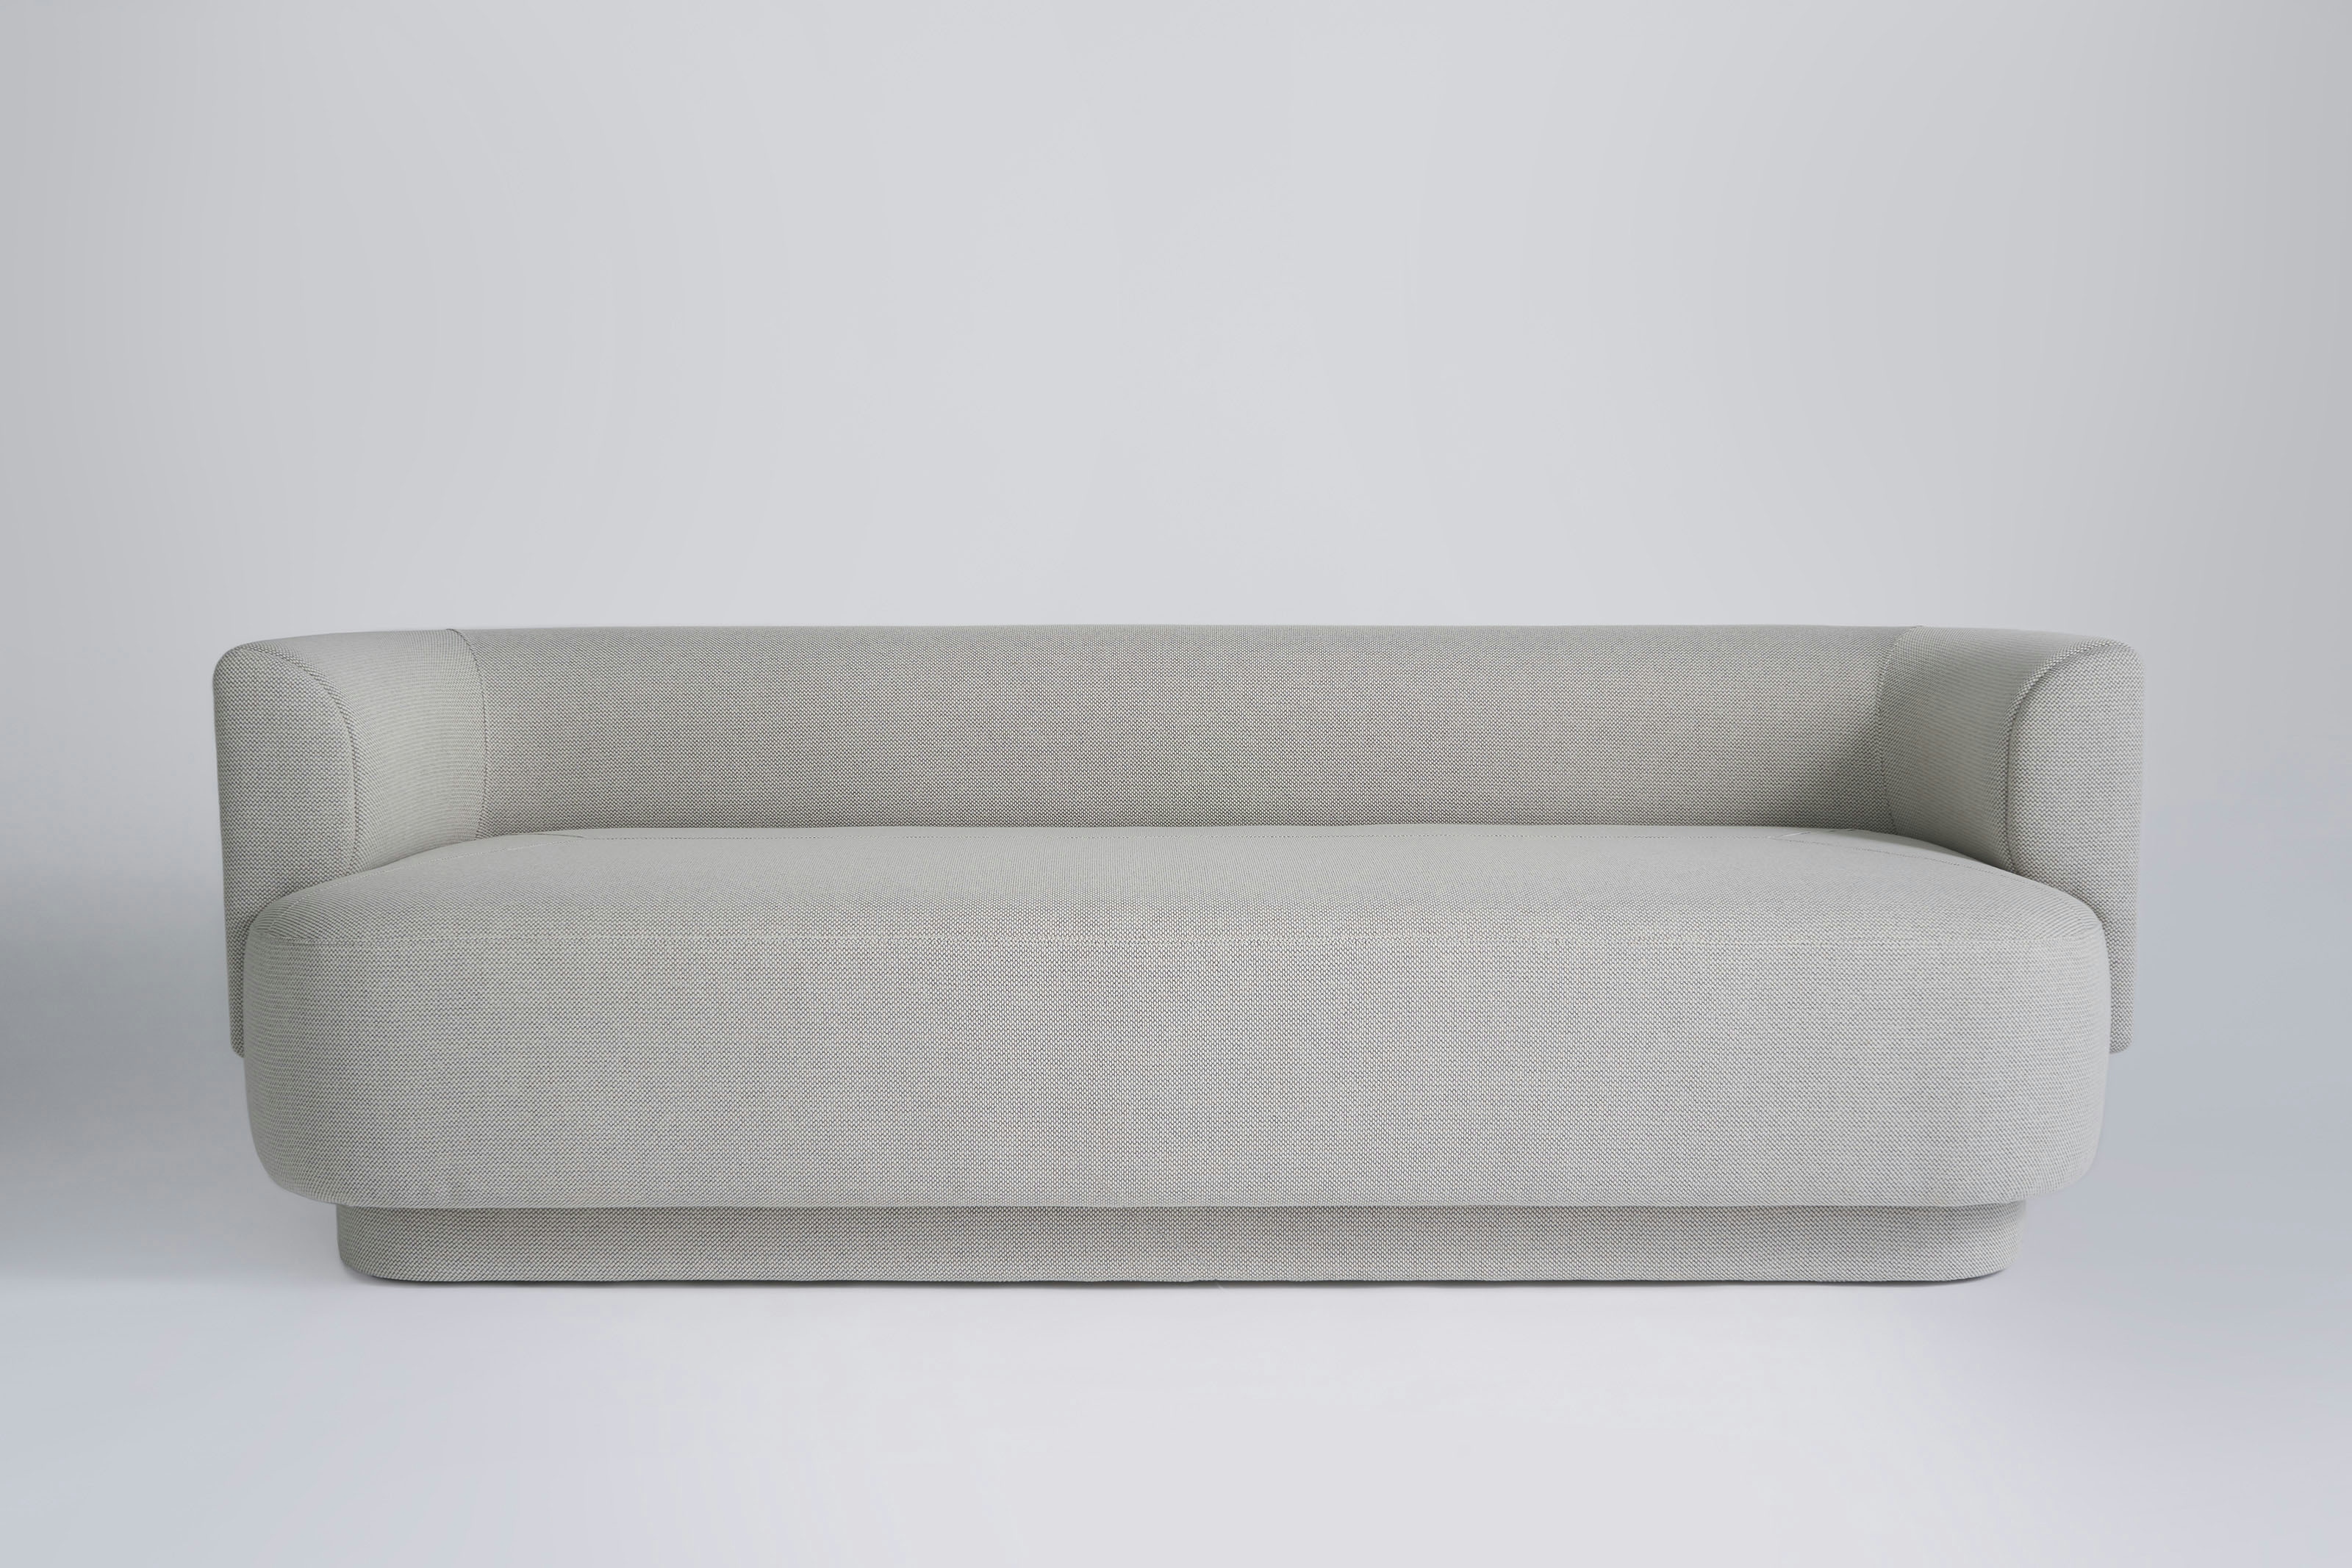 Phase Design Capper Sofa 1 Web